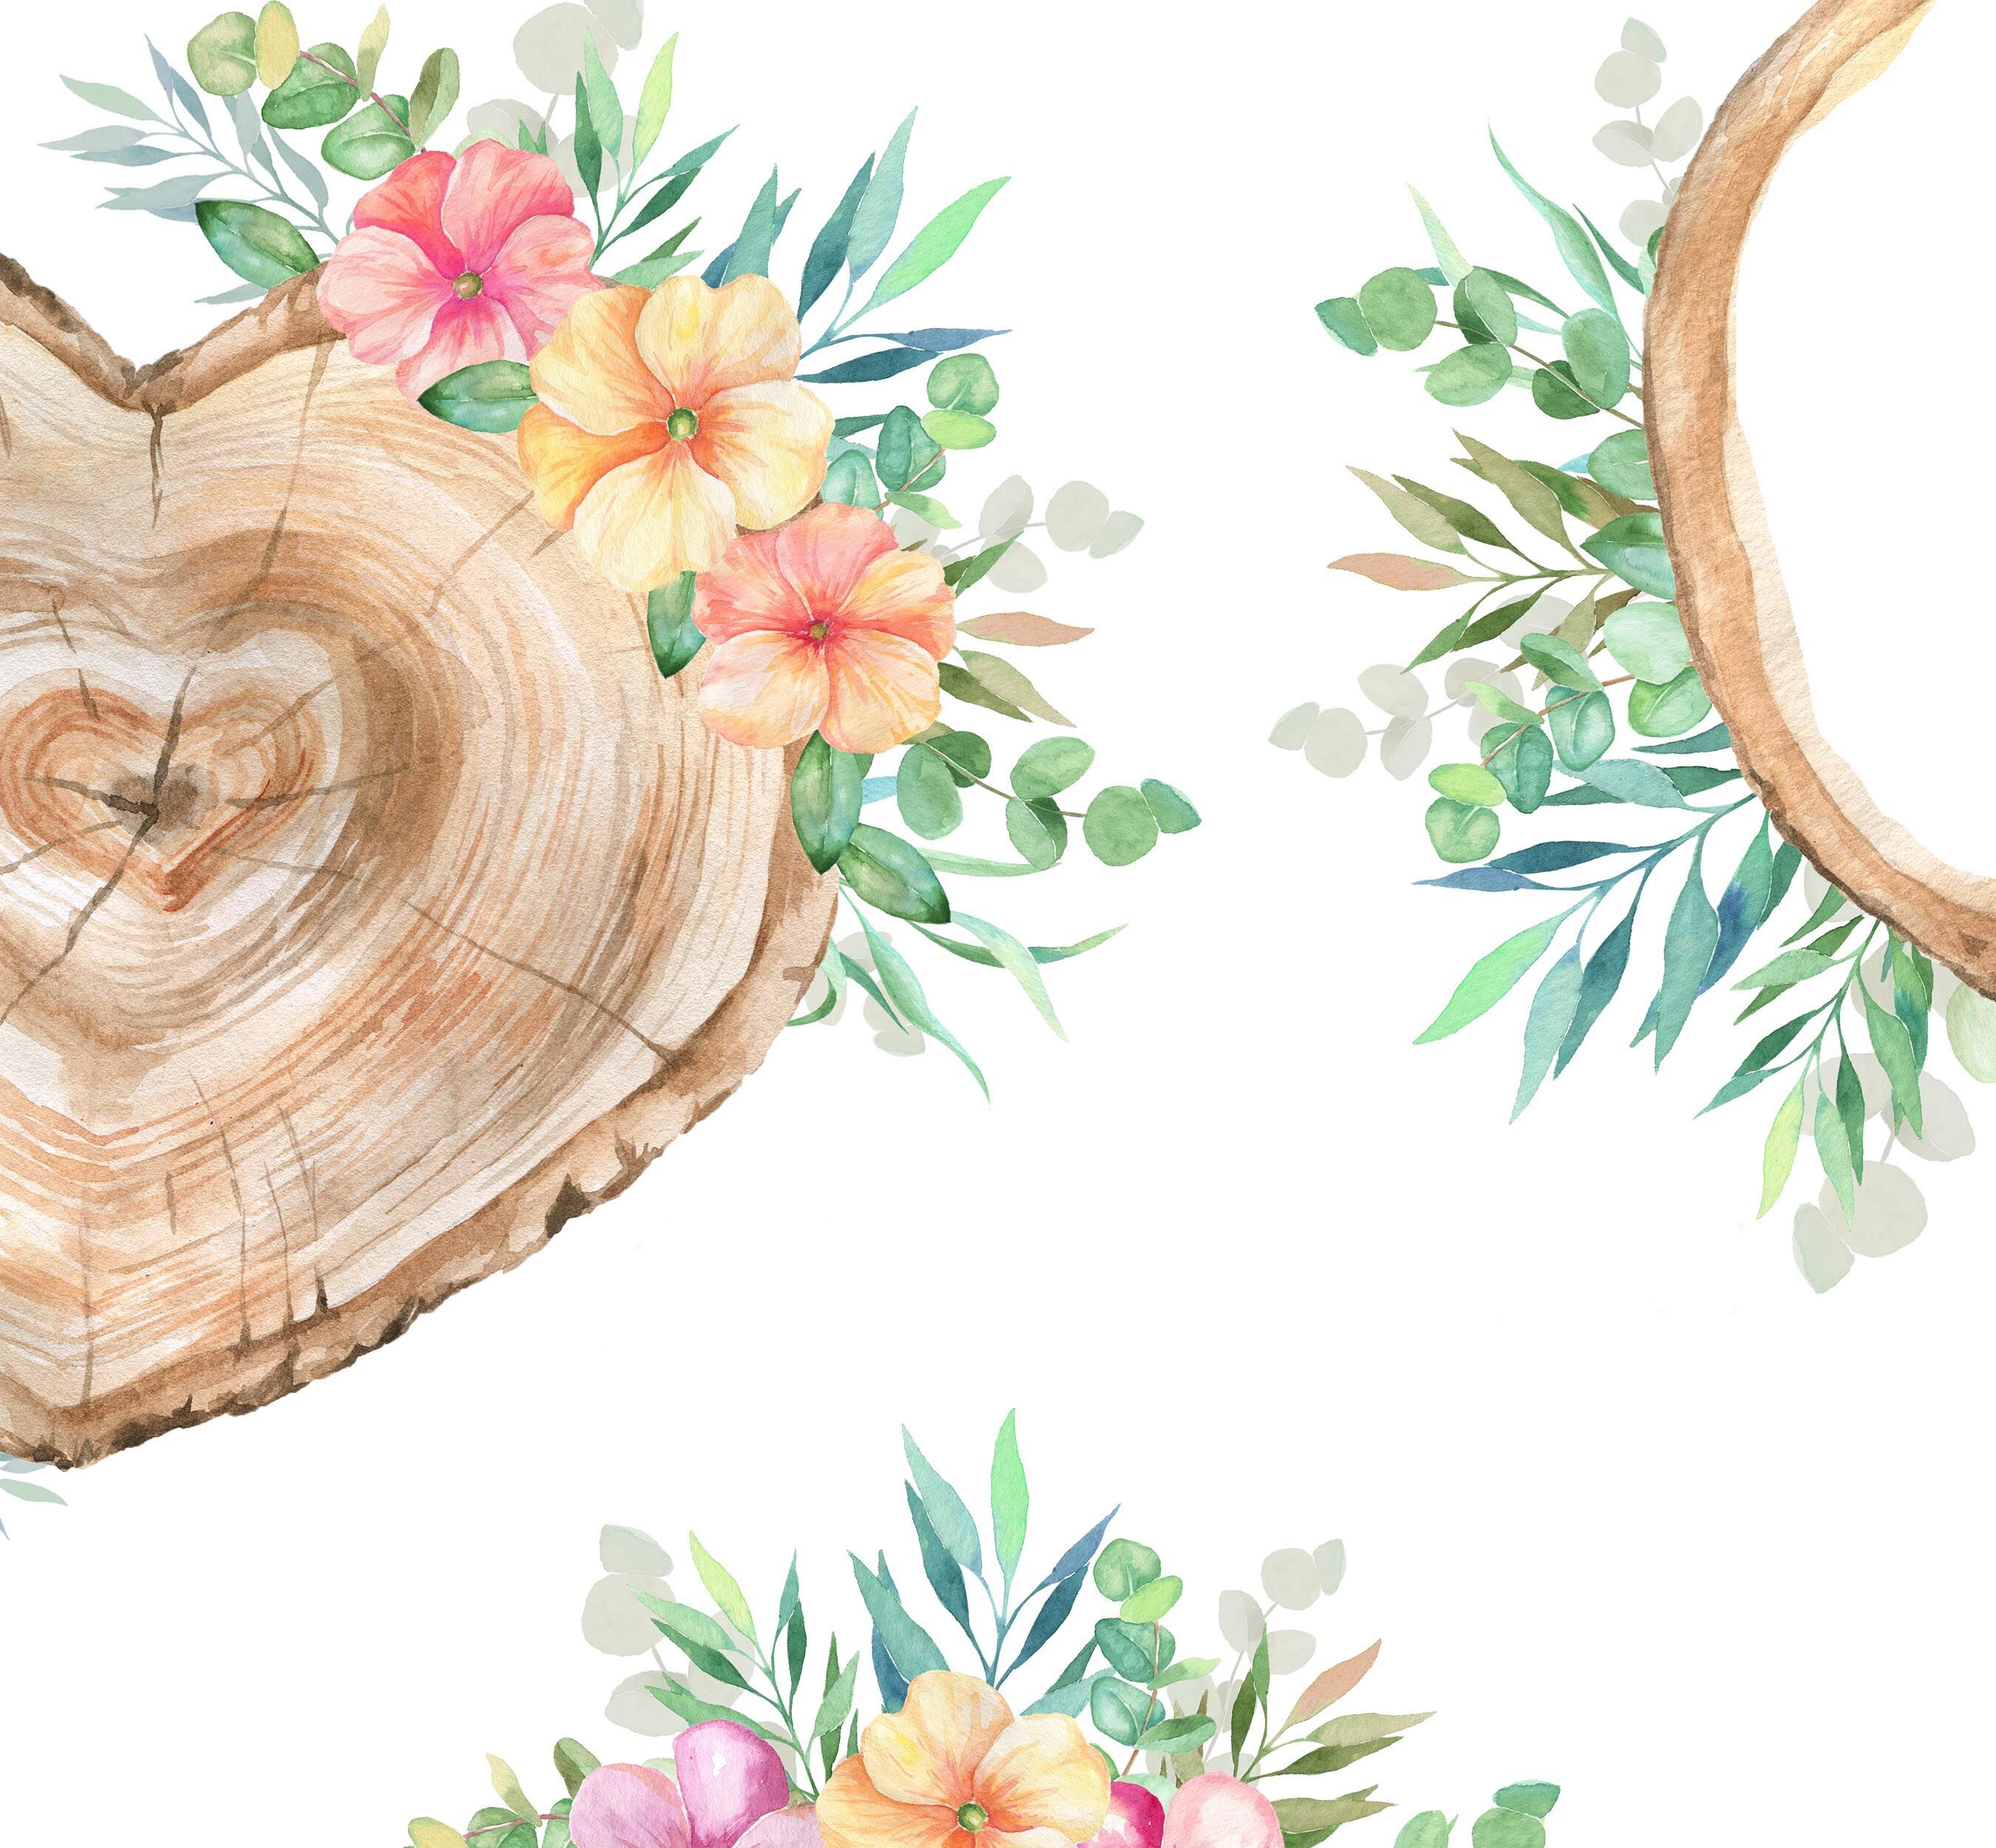 Flower Wooden Stump Watercolor Clipart By Regulrcrative